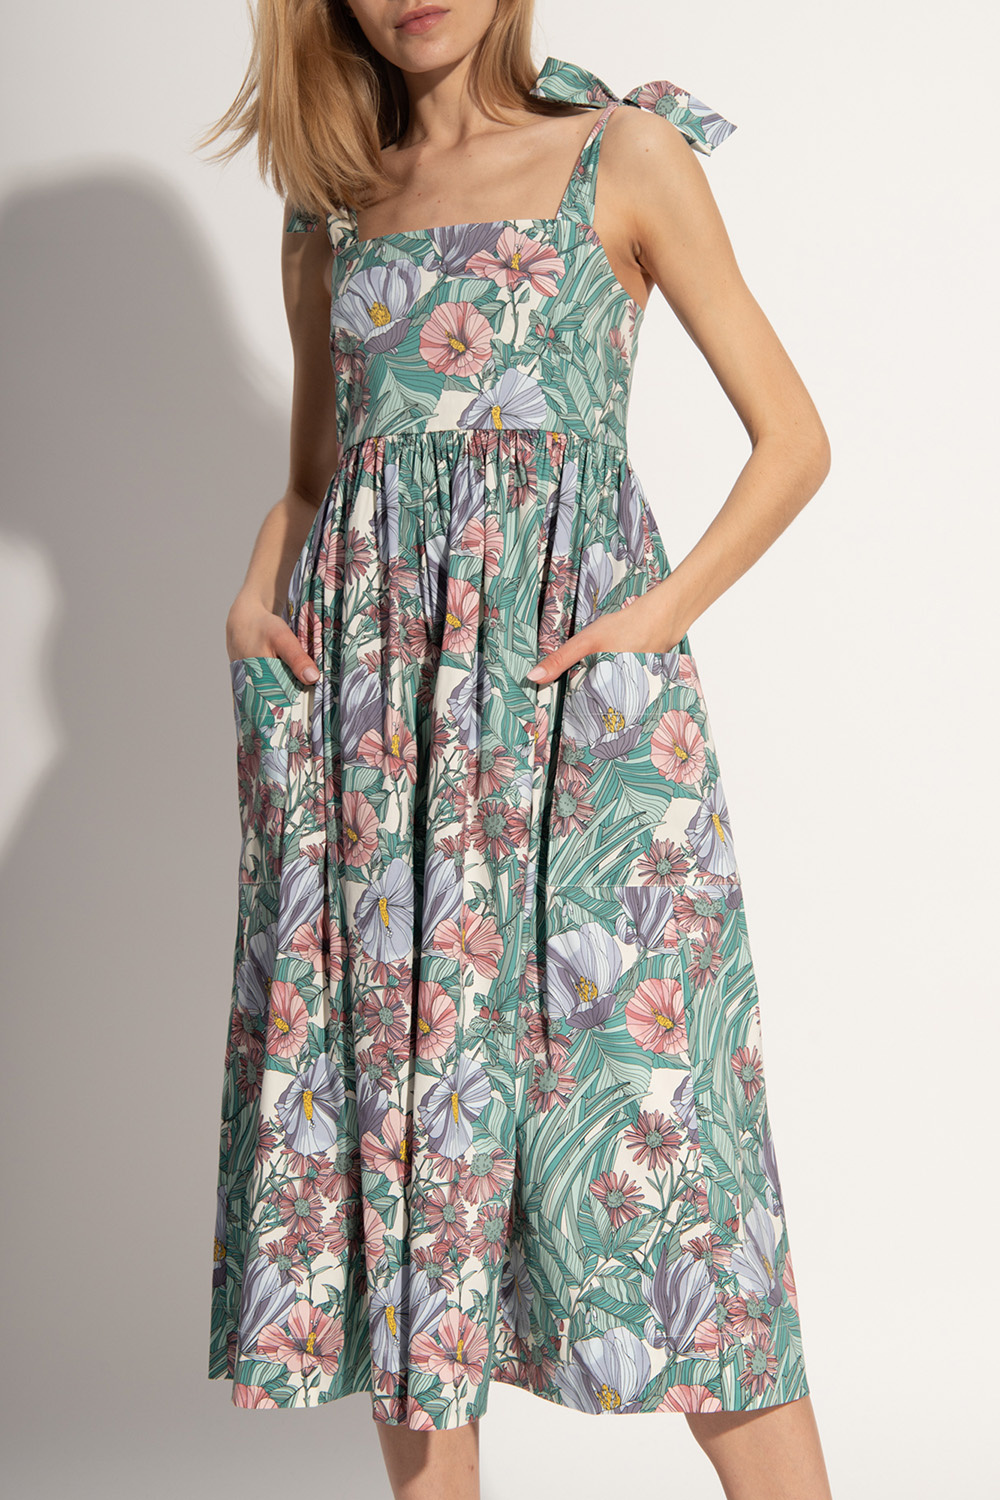 Tory Burch Floral print dress | Women's ...